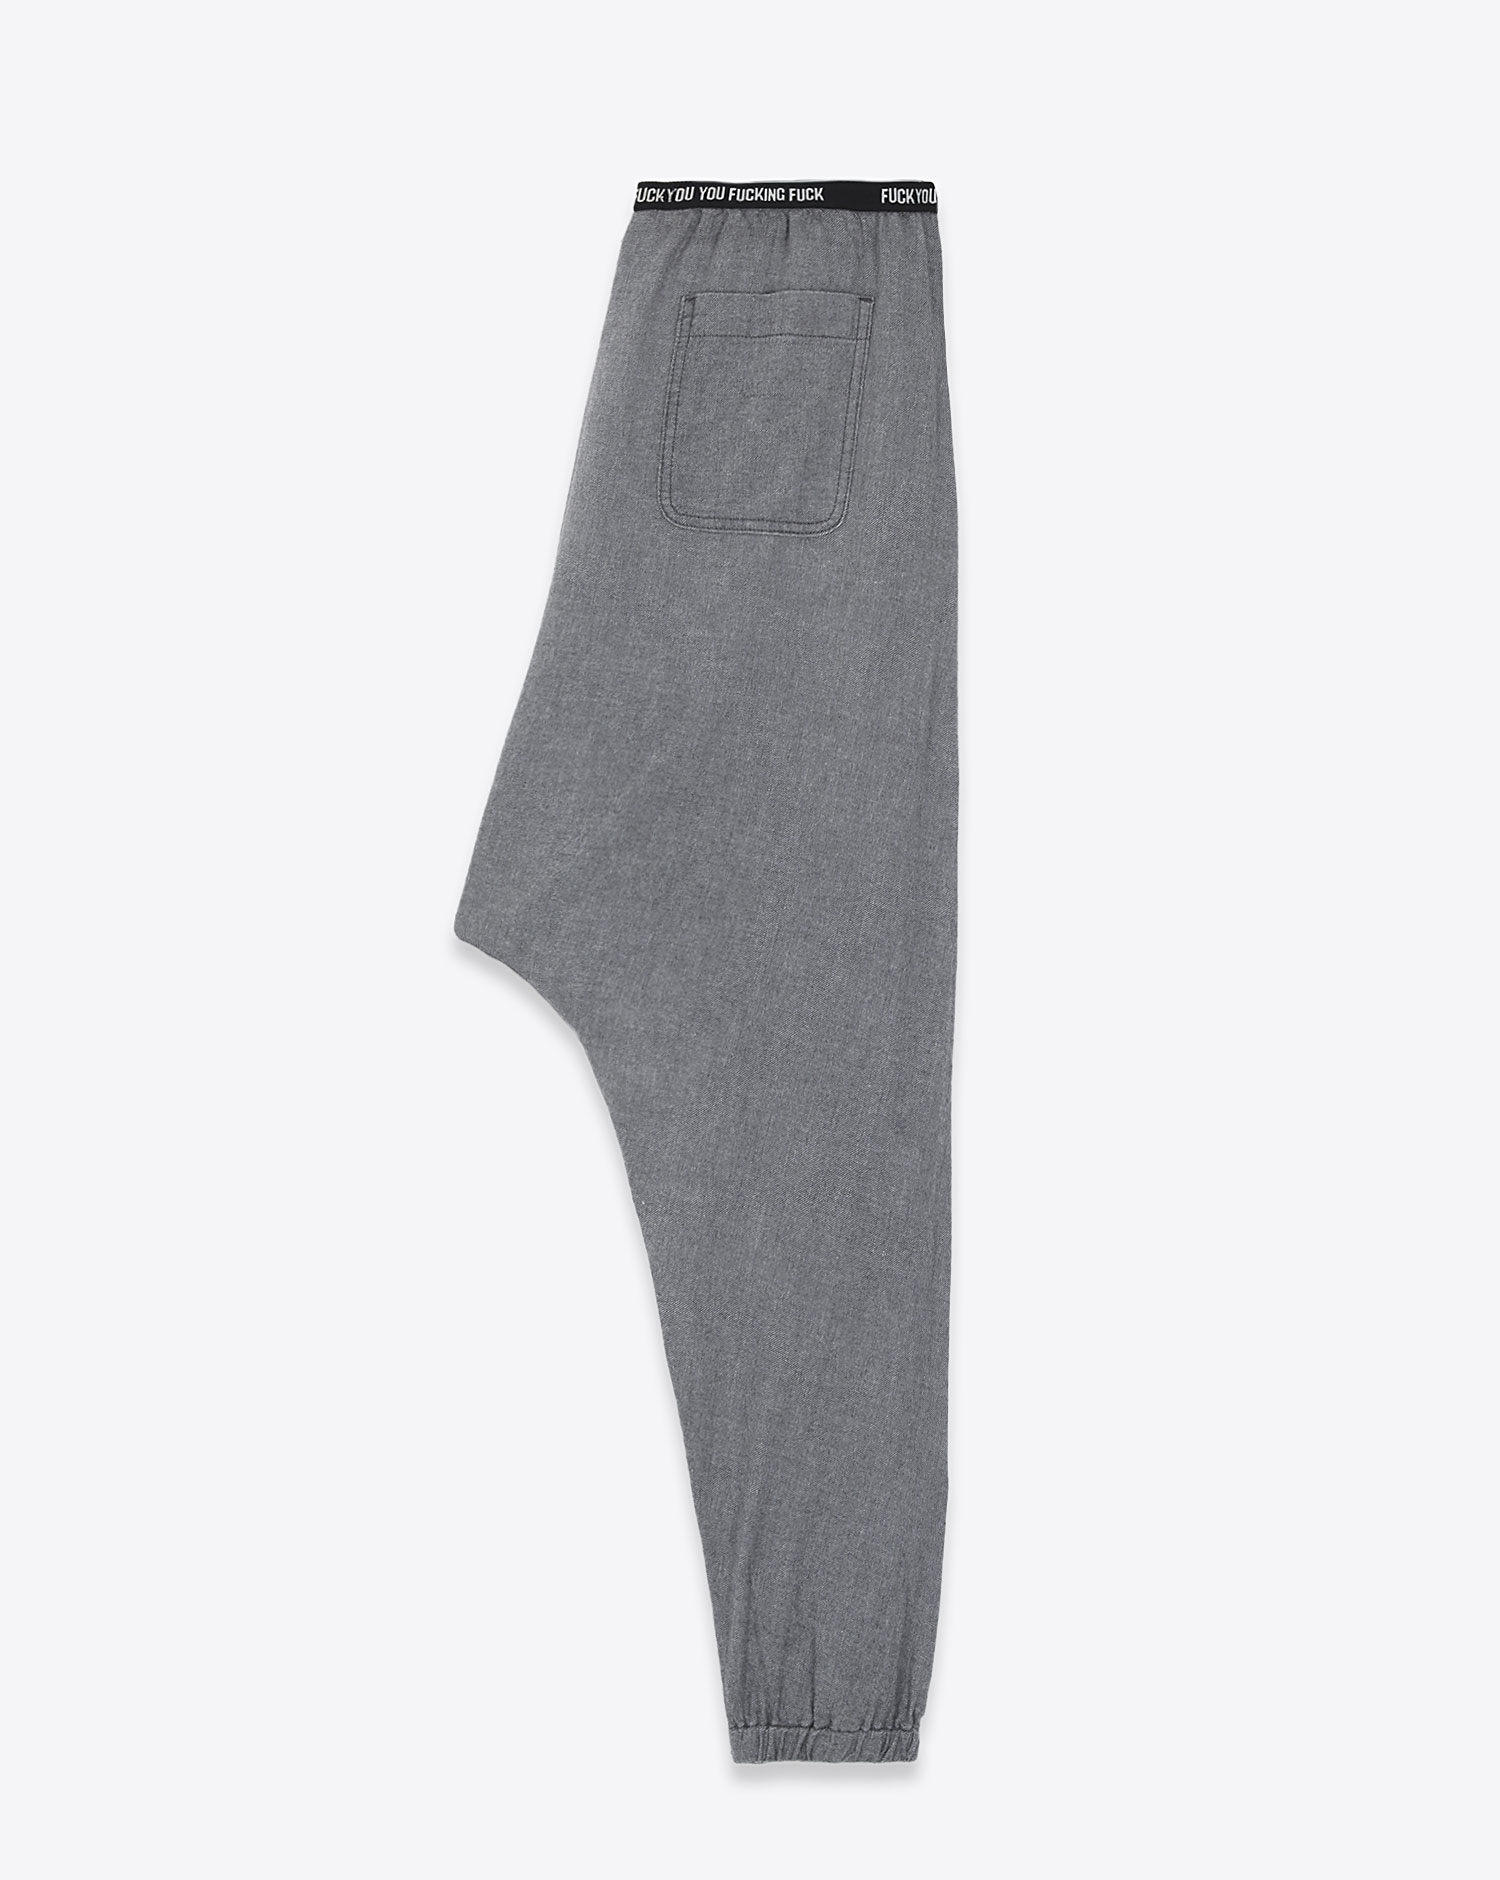 Pantalon sarouel FUUF Lounge Pant - Charcoal r13